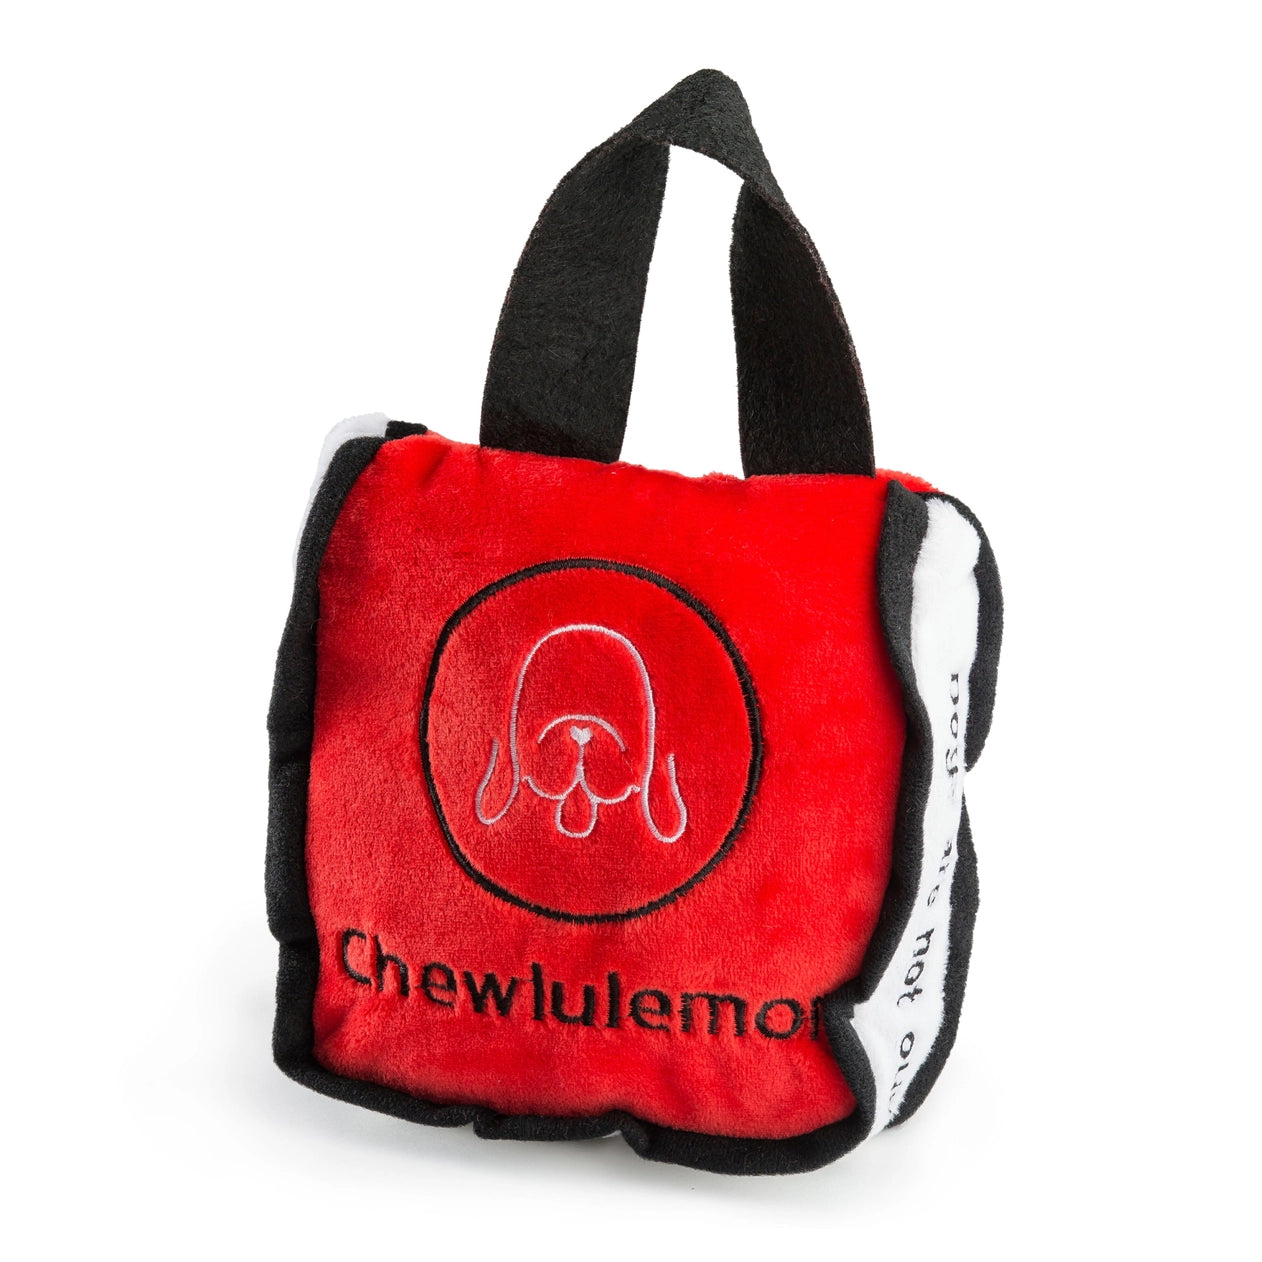 Chewlulemon Tote Bag Squeaker Dog Toy